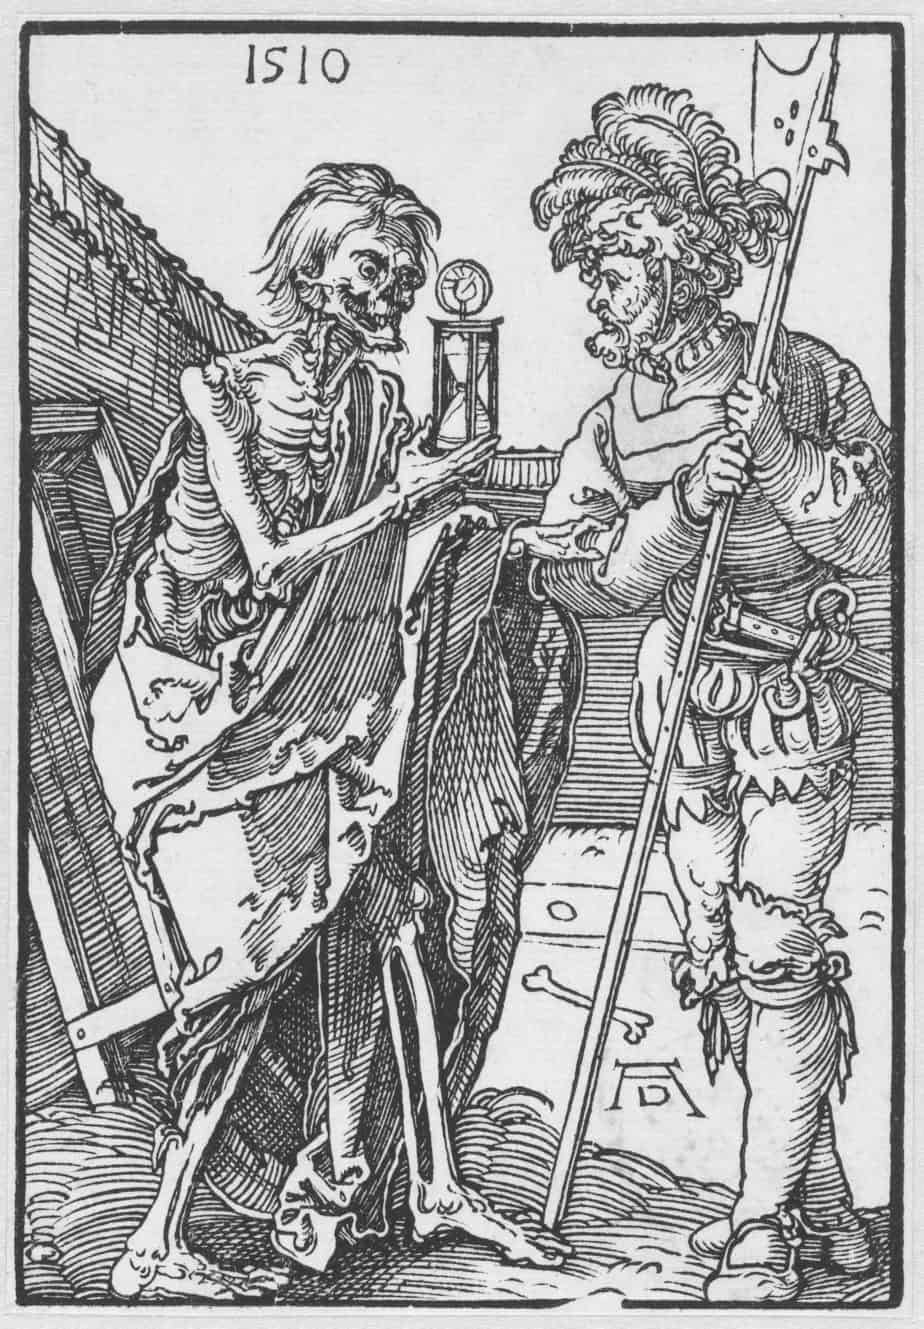 The Soldier and Death, Albrecht Dürer, 1510 time death